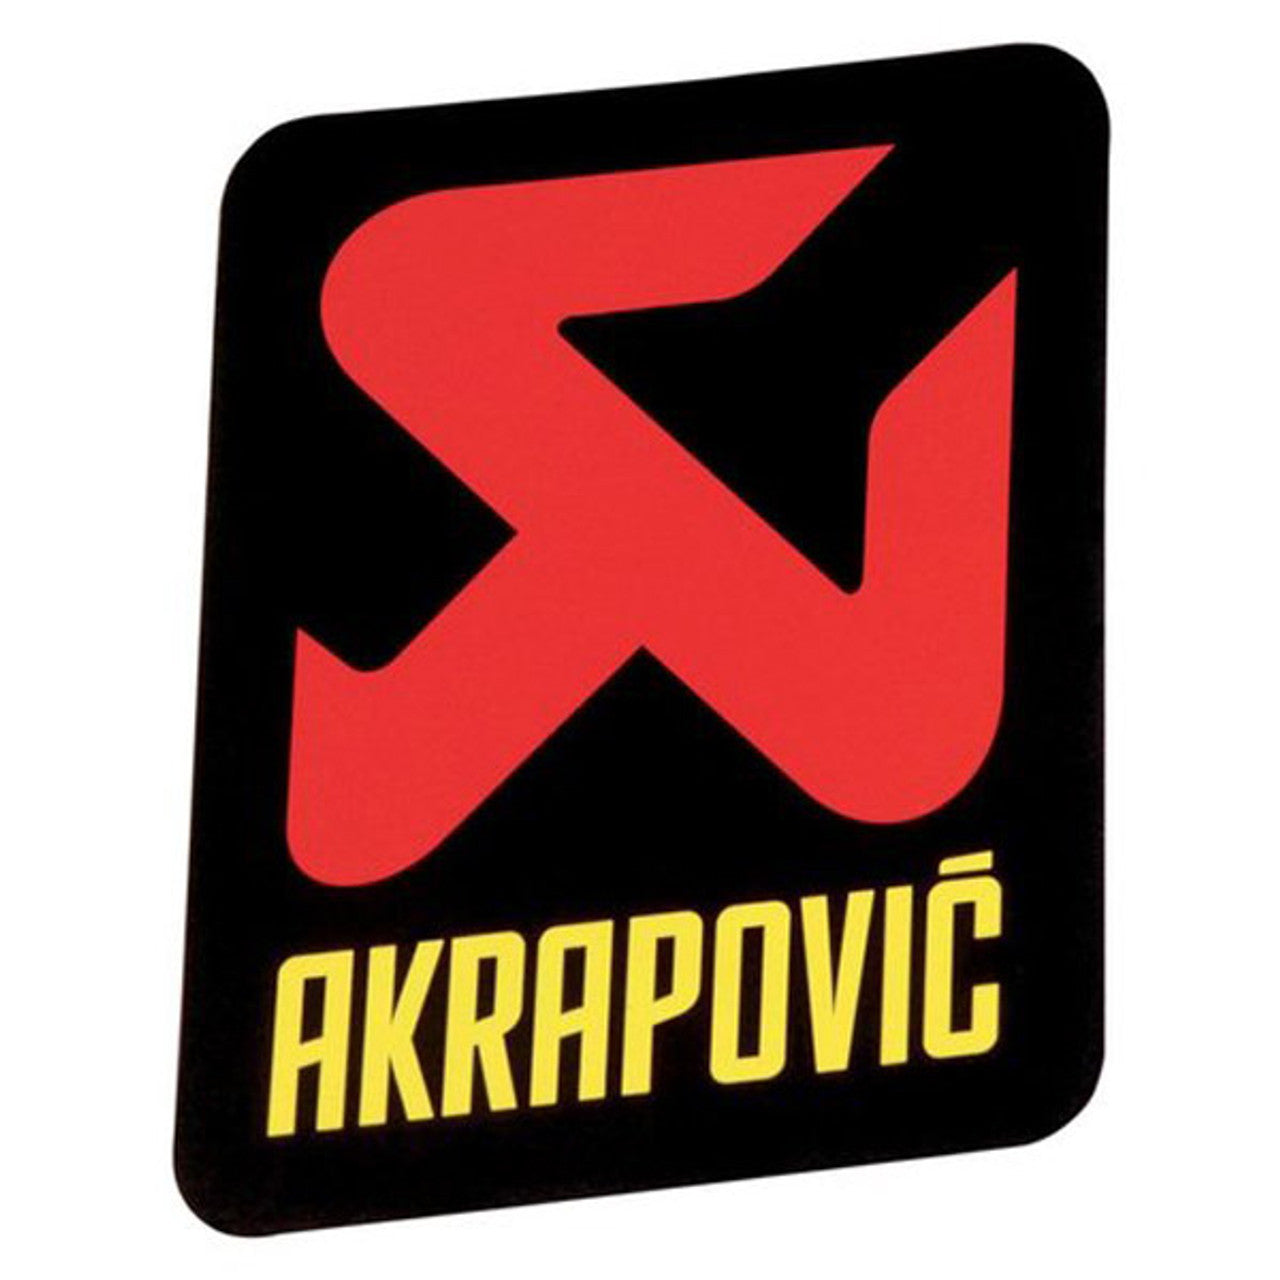 Share more than 231 akrapovic logo